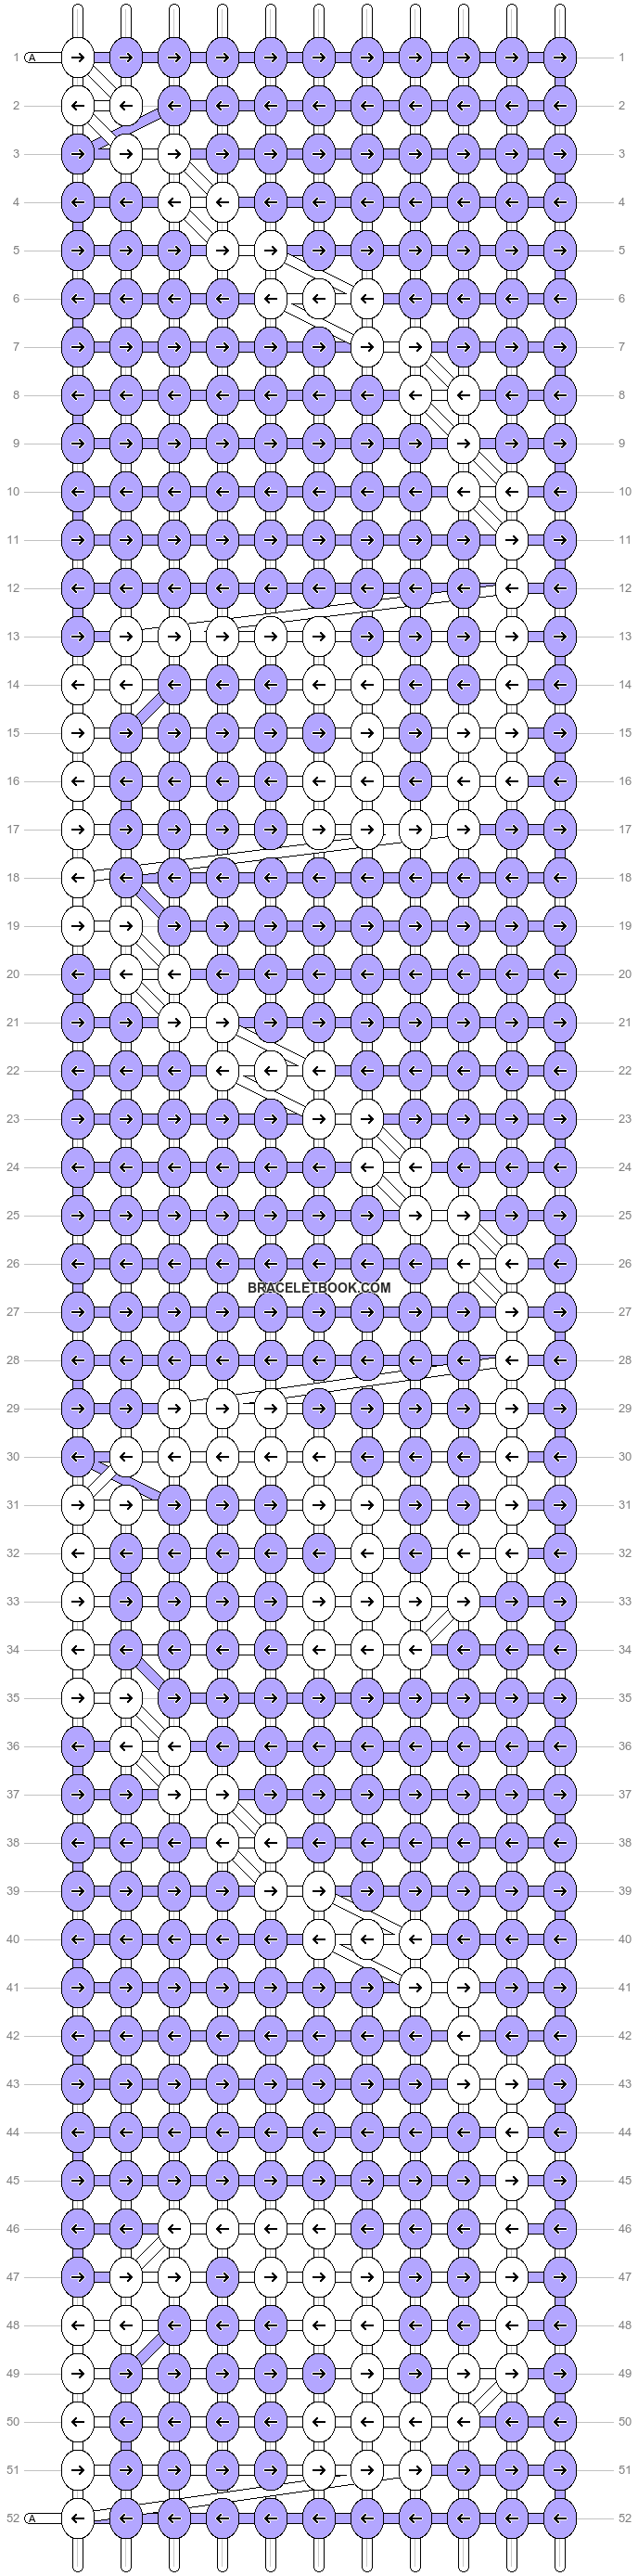 Alpha pattern #45382 variation #66718 pattern